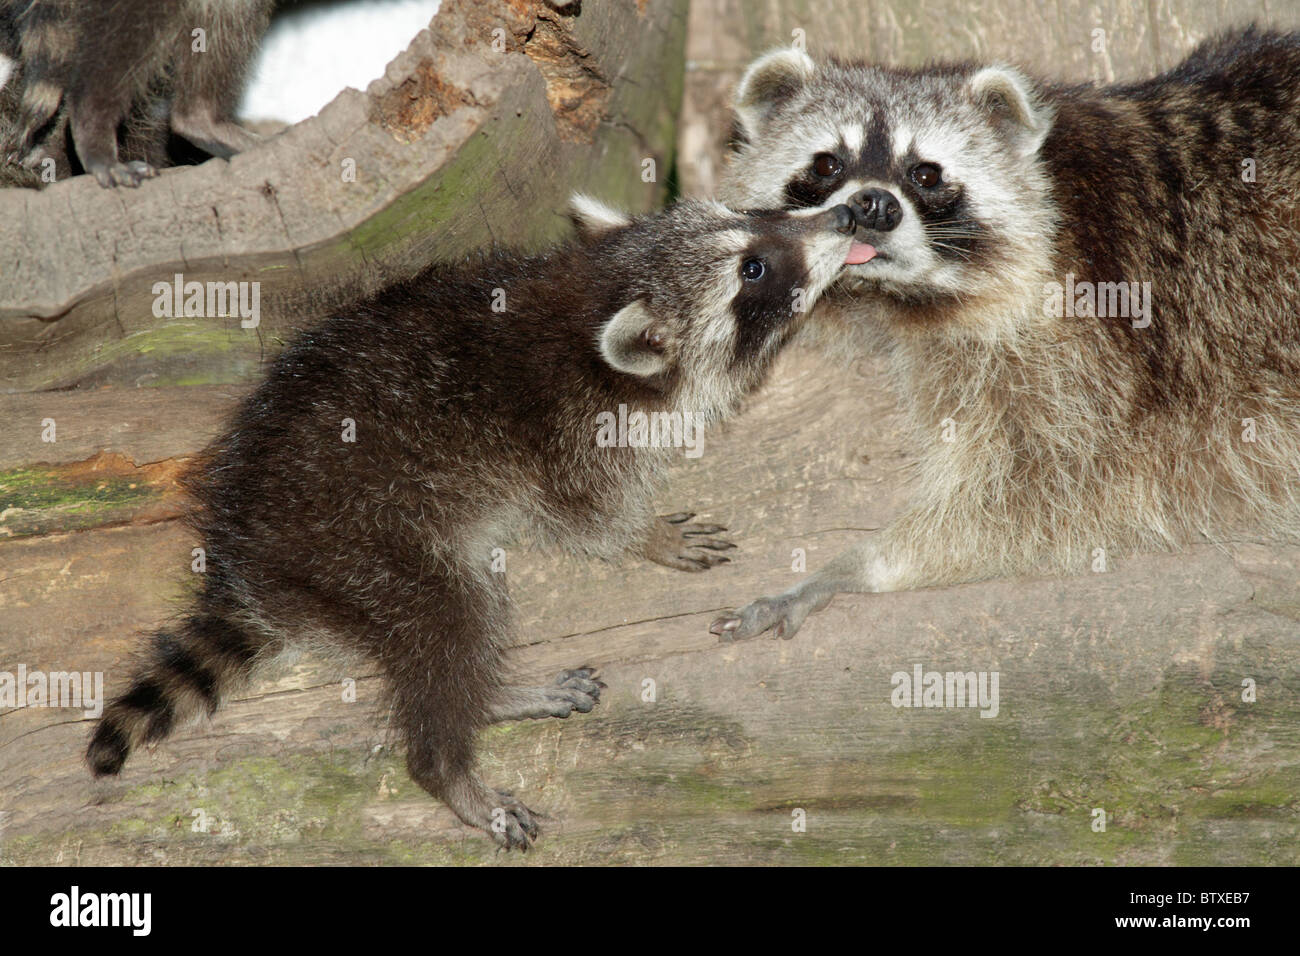 Raccoon (Procyon lotor), baby animal seeking contact with mother, Germany Stock Photo